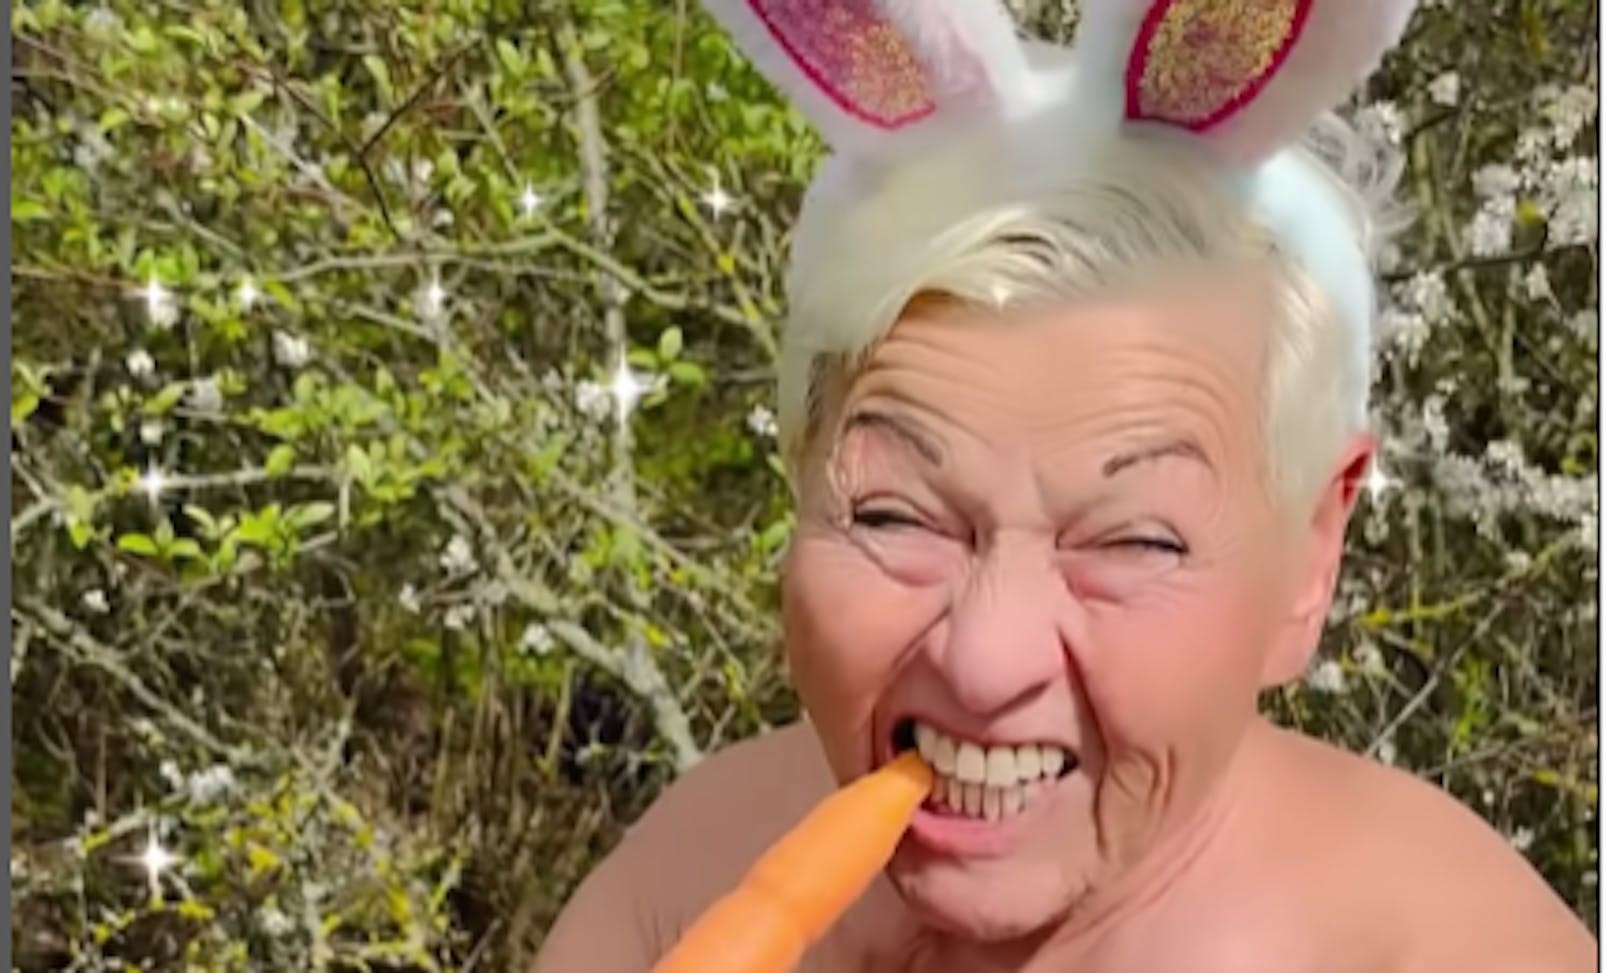 Jazz Gitti im Bunny-Kostüm: "Nichts zu blöd"